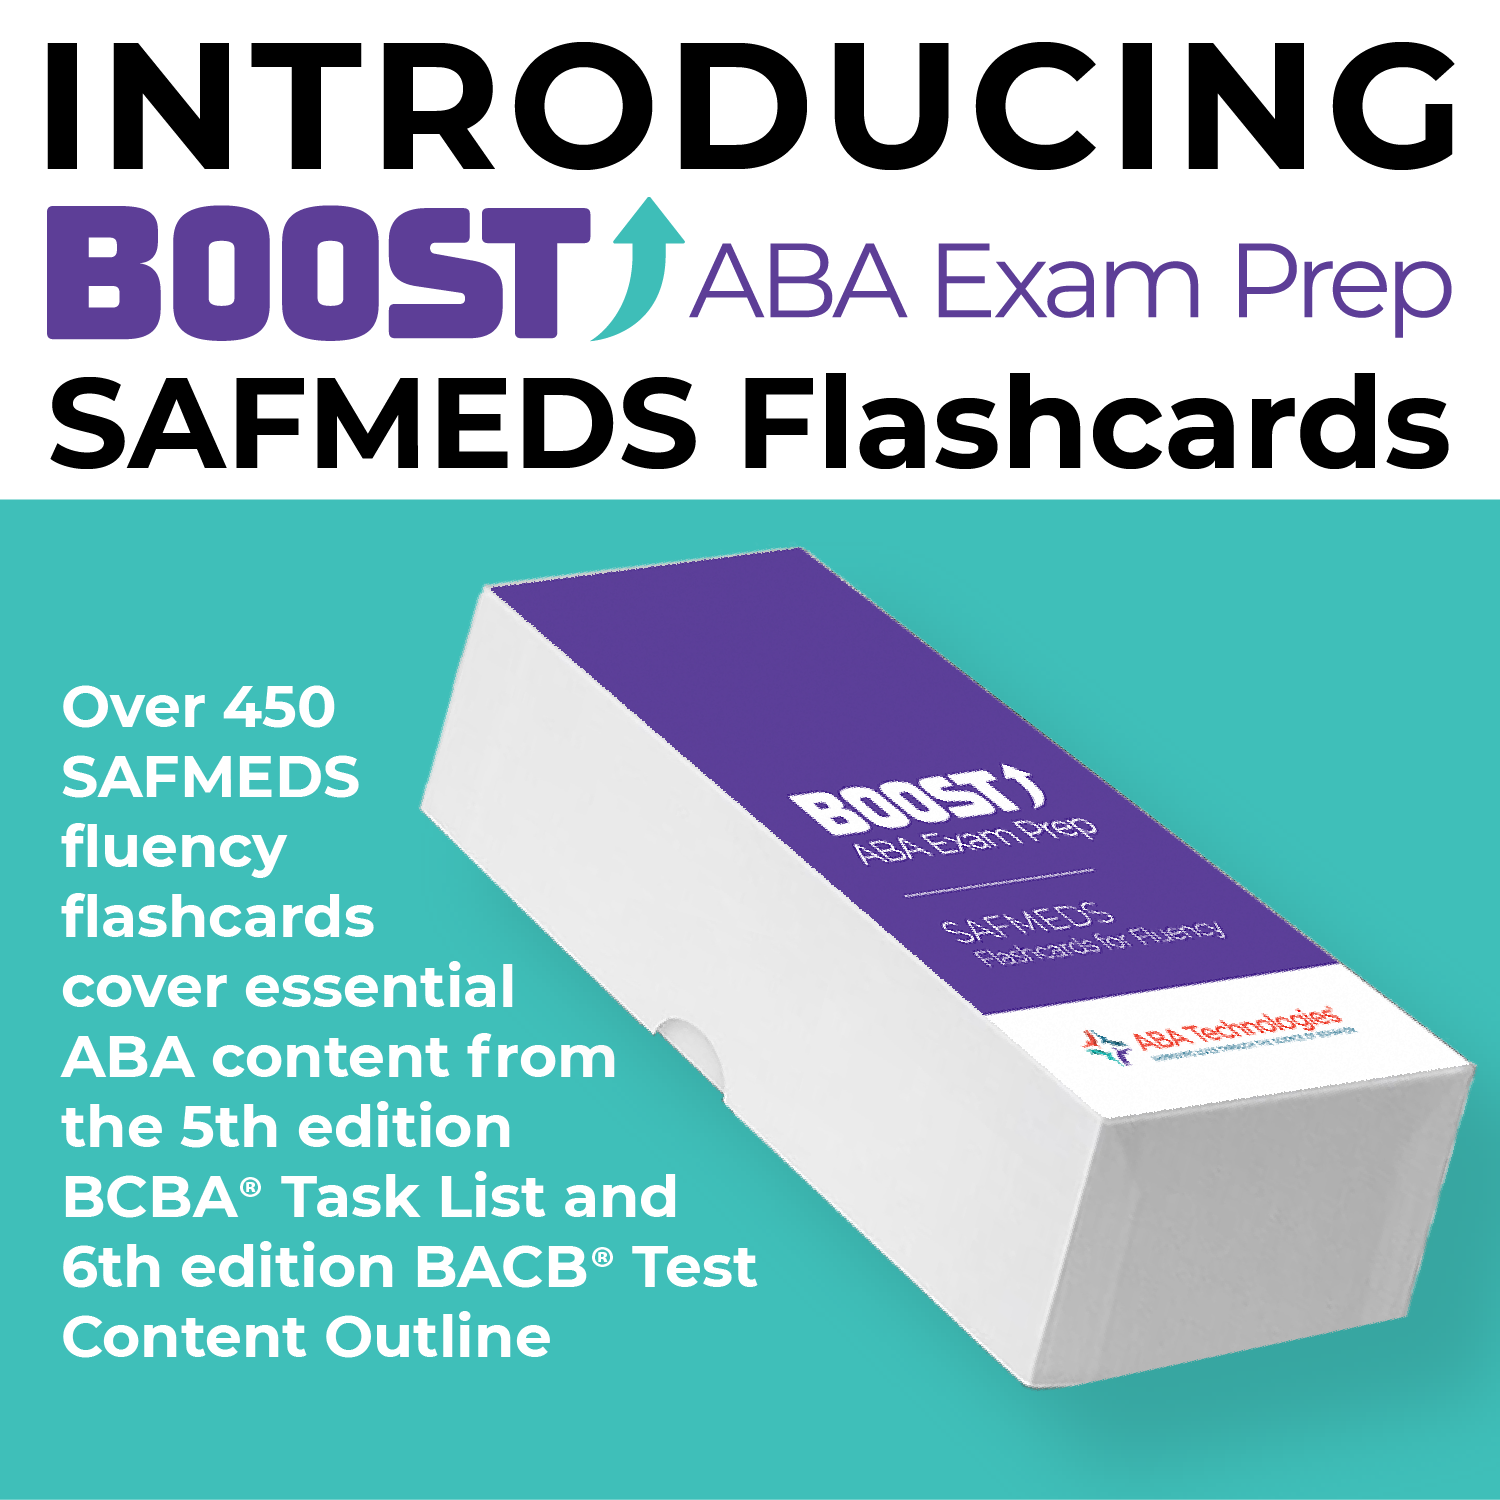 An Advertisement for BOOST BCBA Exam Prep SAFMEDS Flashcards